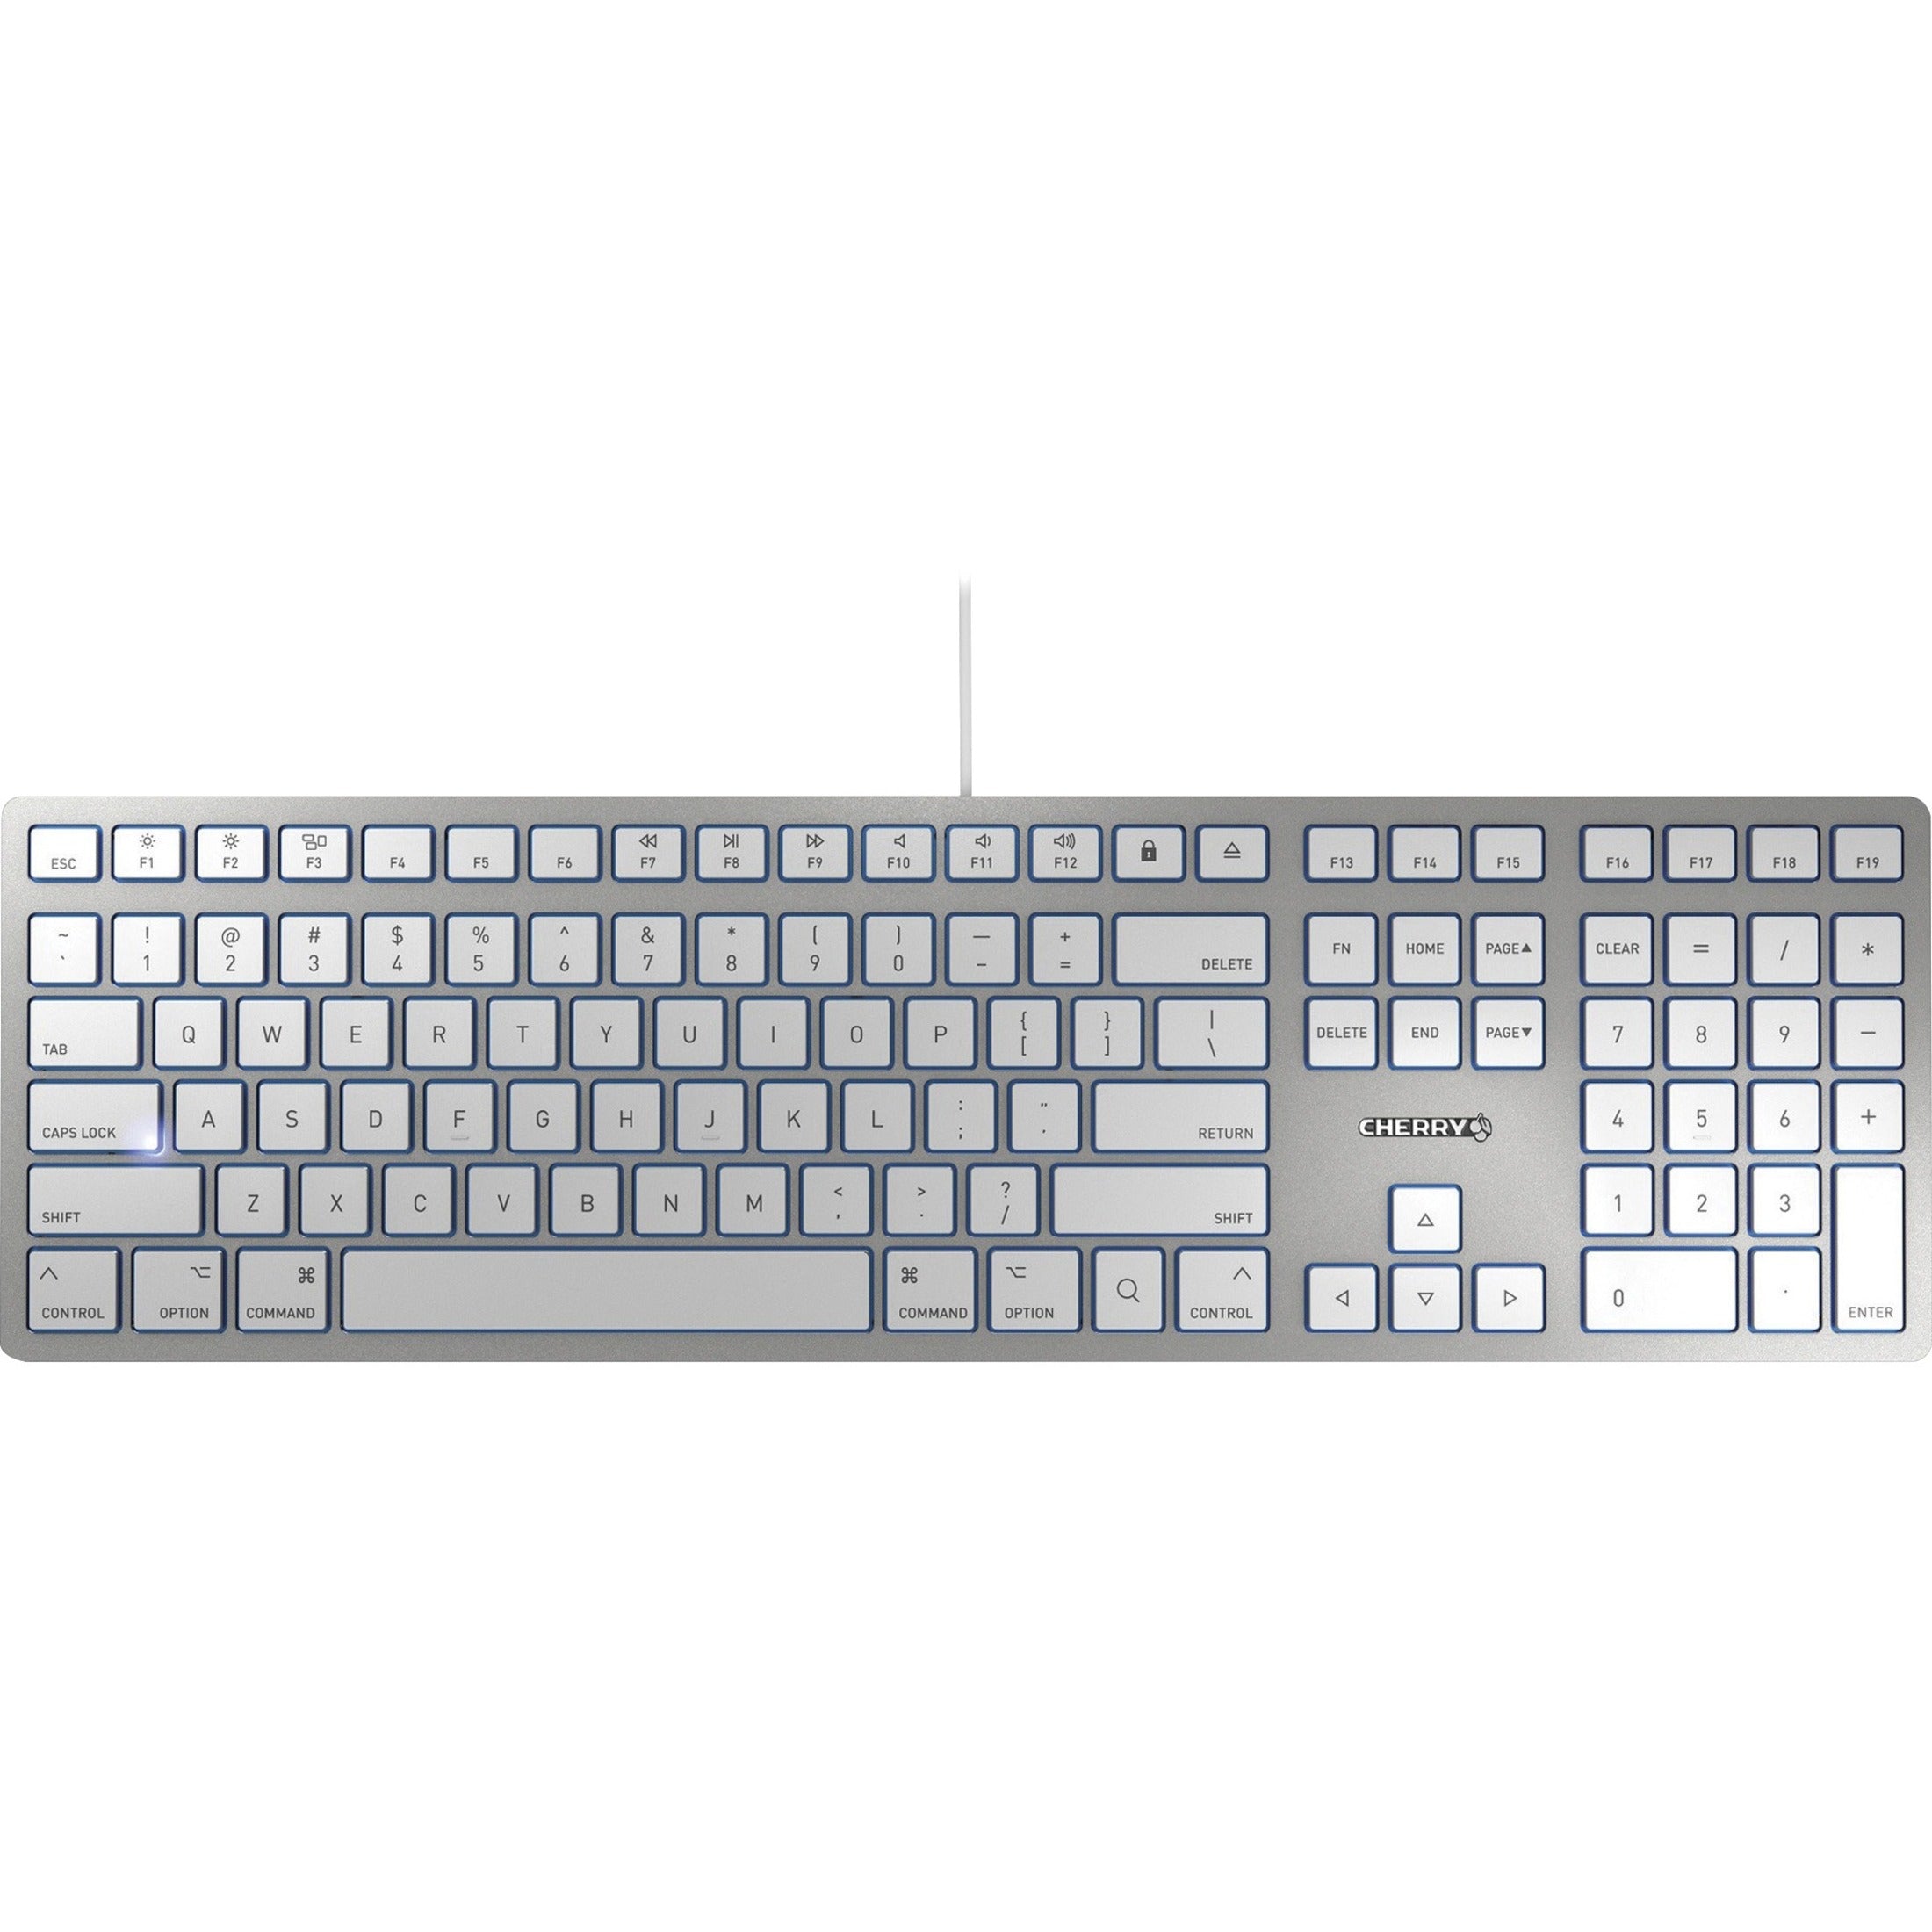 CHERRY JK-1610US-1 KC 6000 SLIM Keyboard, Silver/White Wired Keyboard for Mac